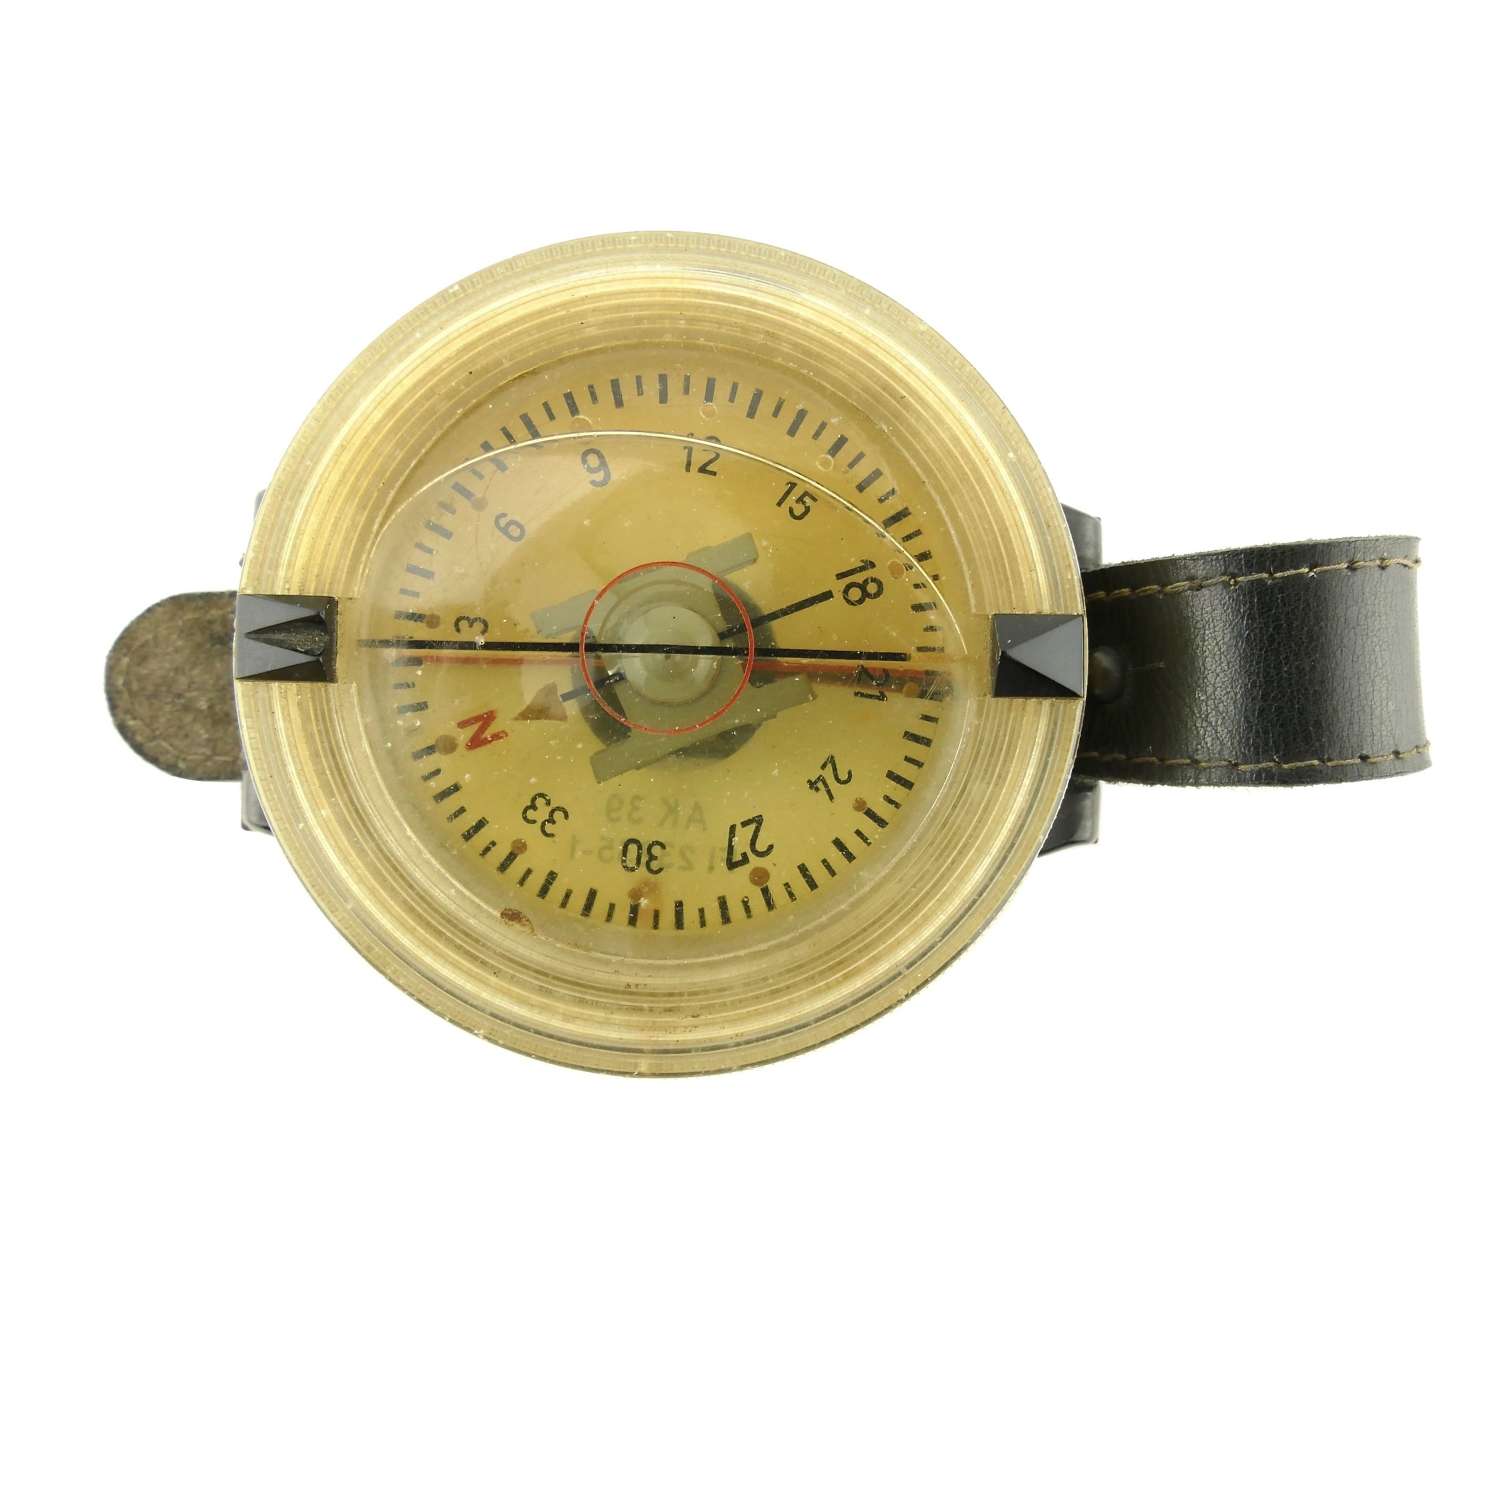 Luftwaffe armbandkompass